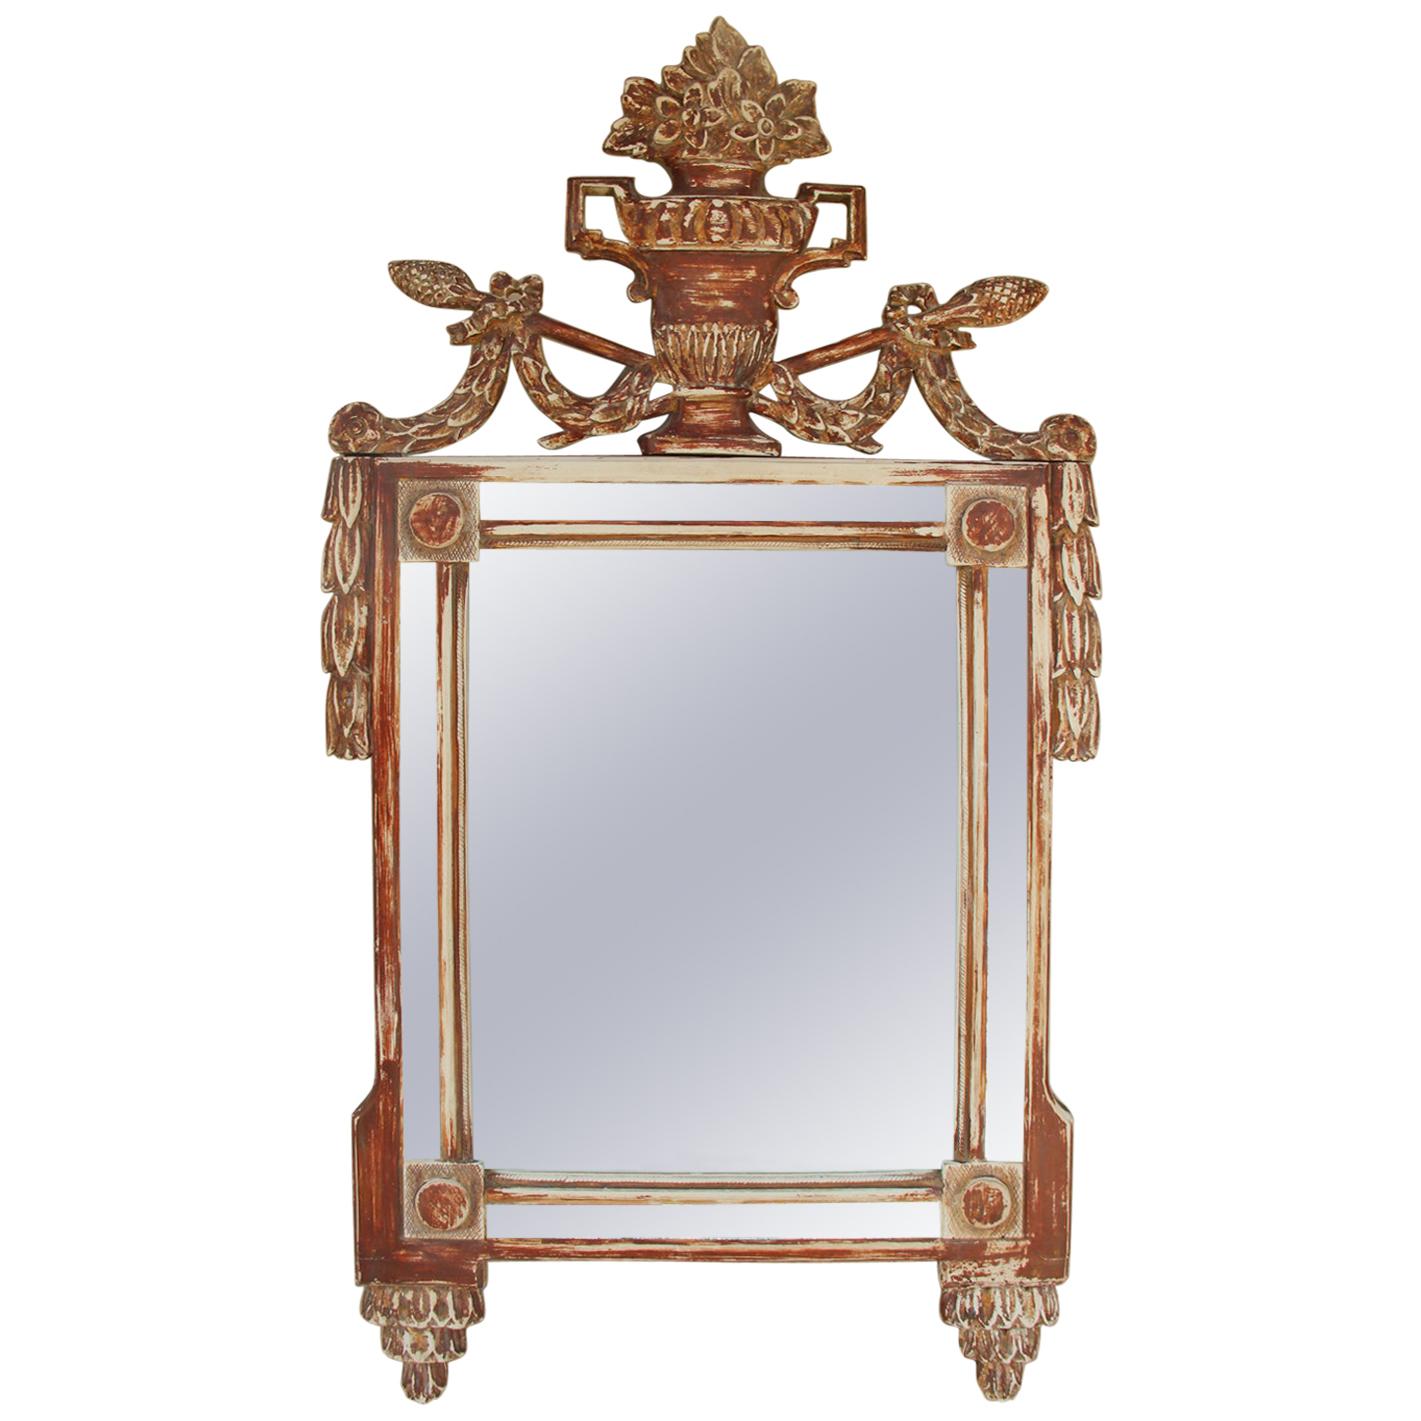 18th Century French Louis XVI Period Mirror with Original Mirror Plate